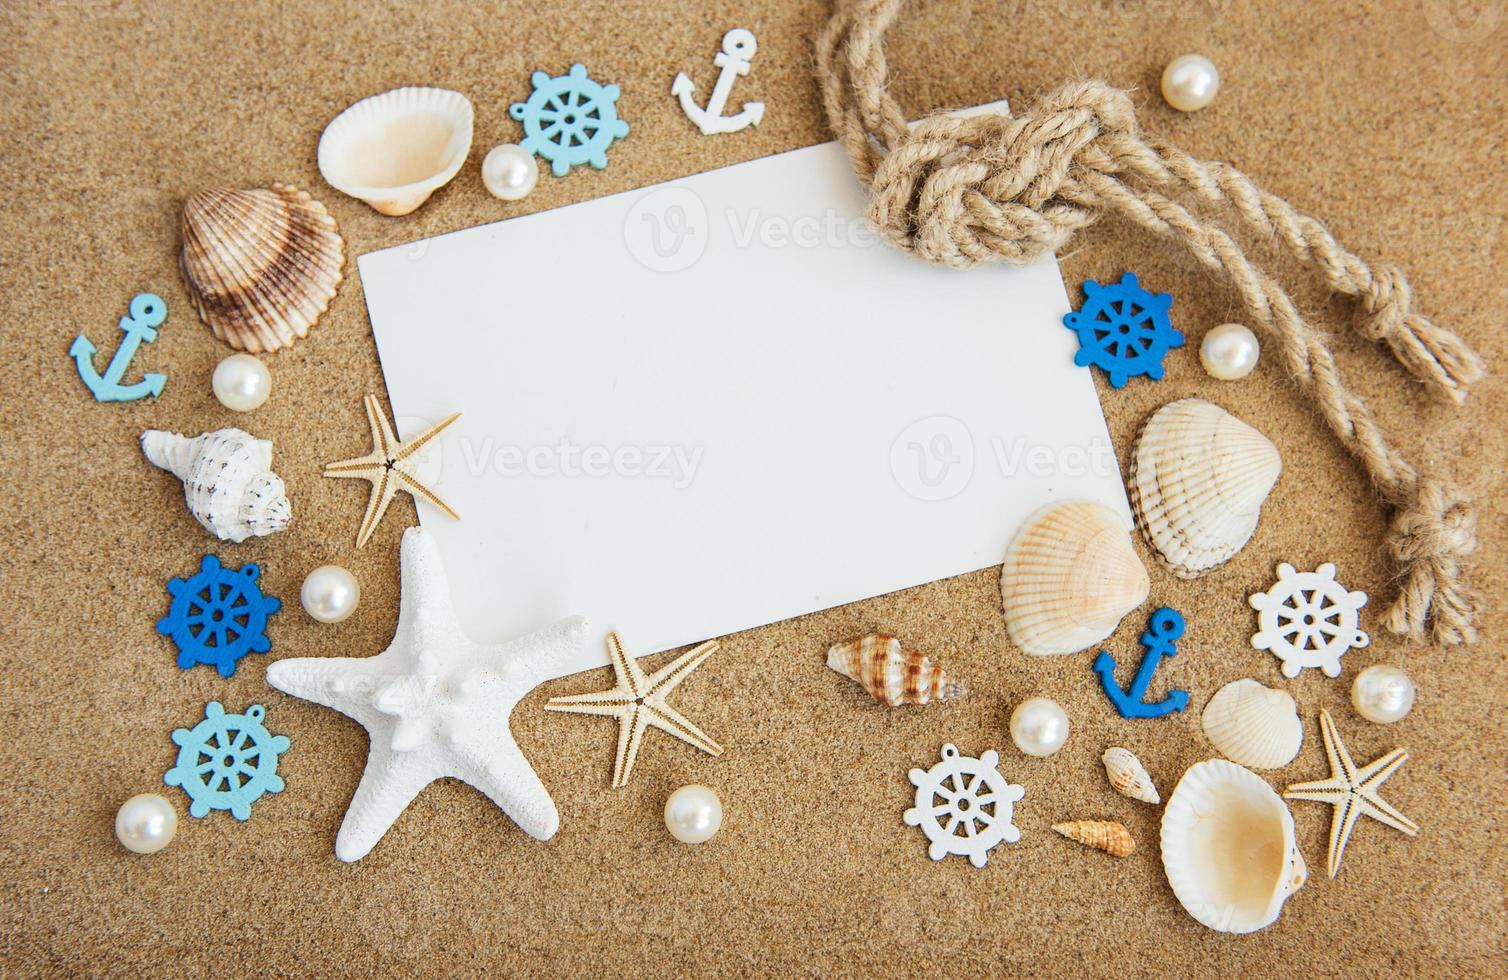 conchiglie, stelle marine e cartolina vuota foto